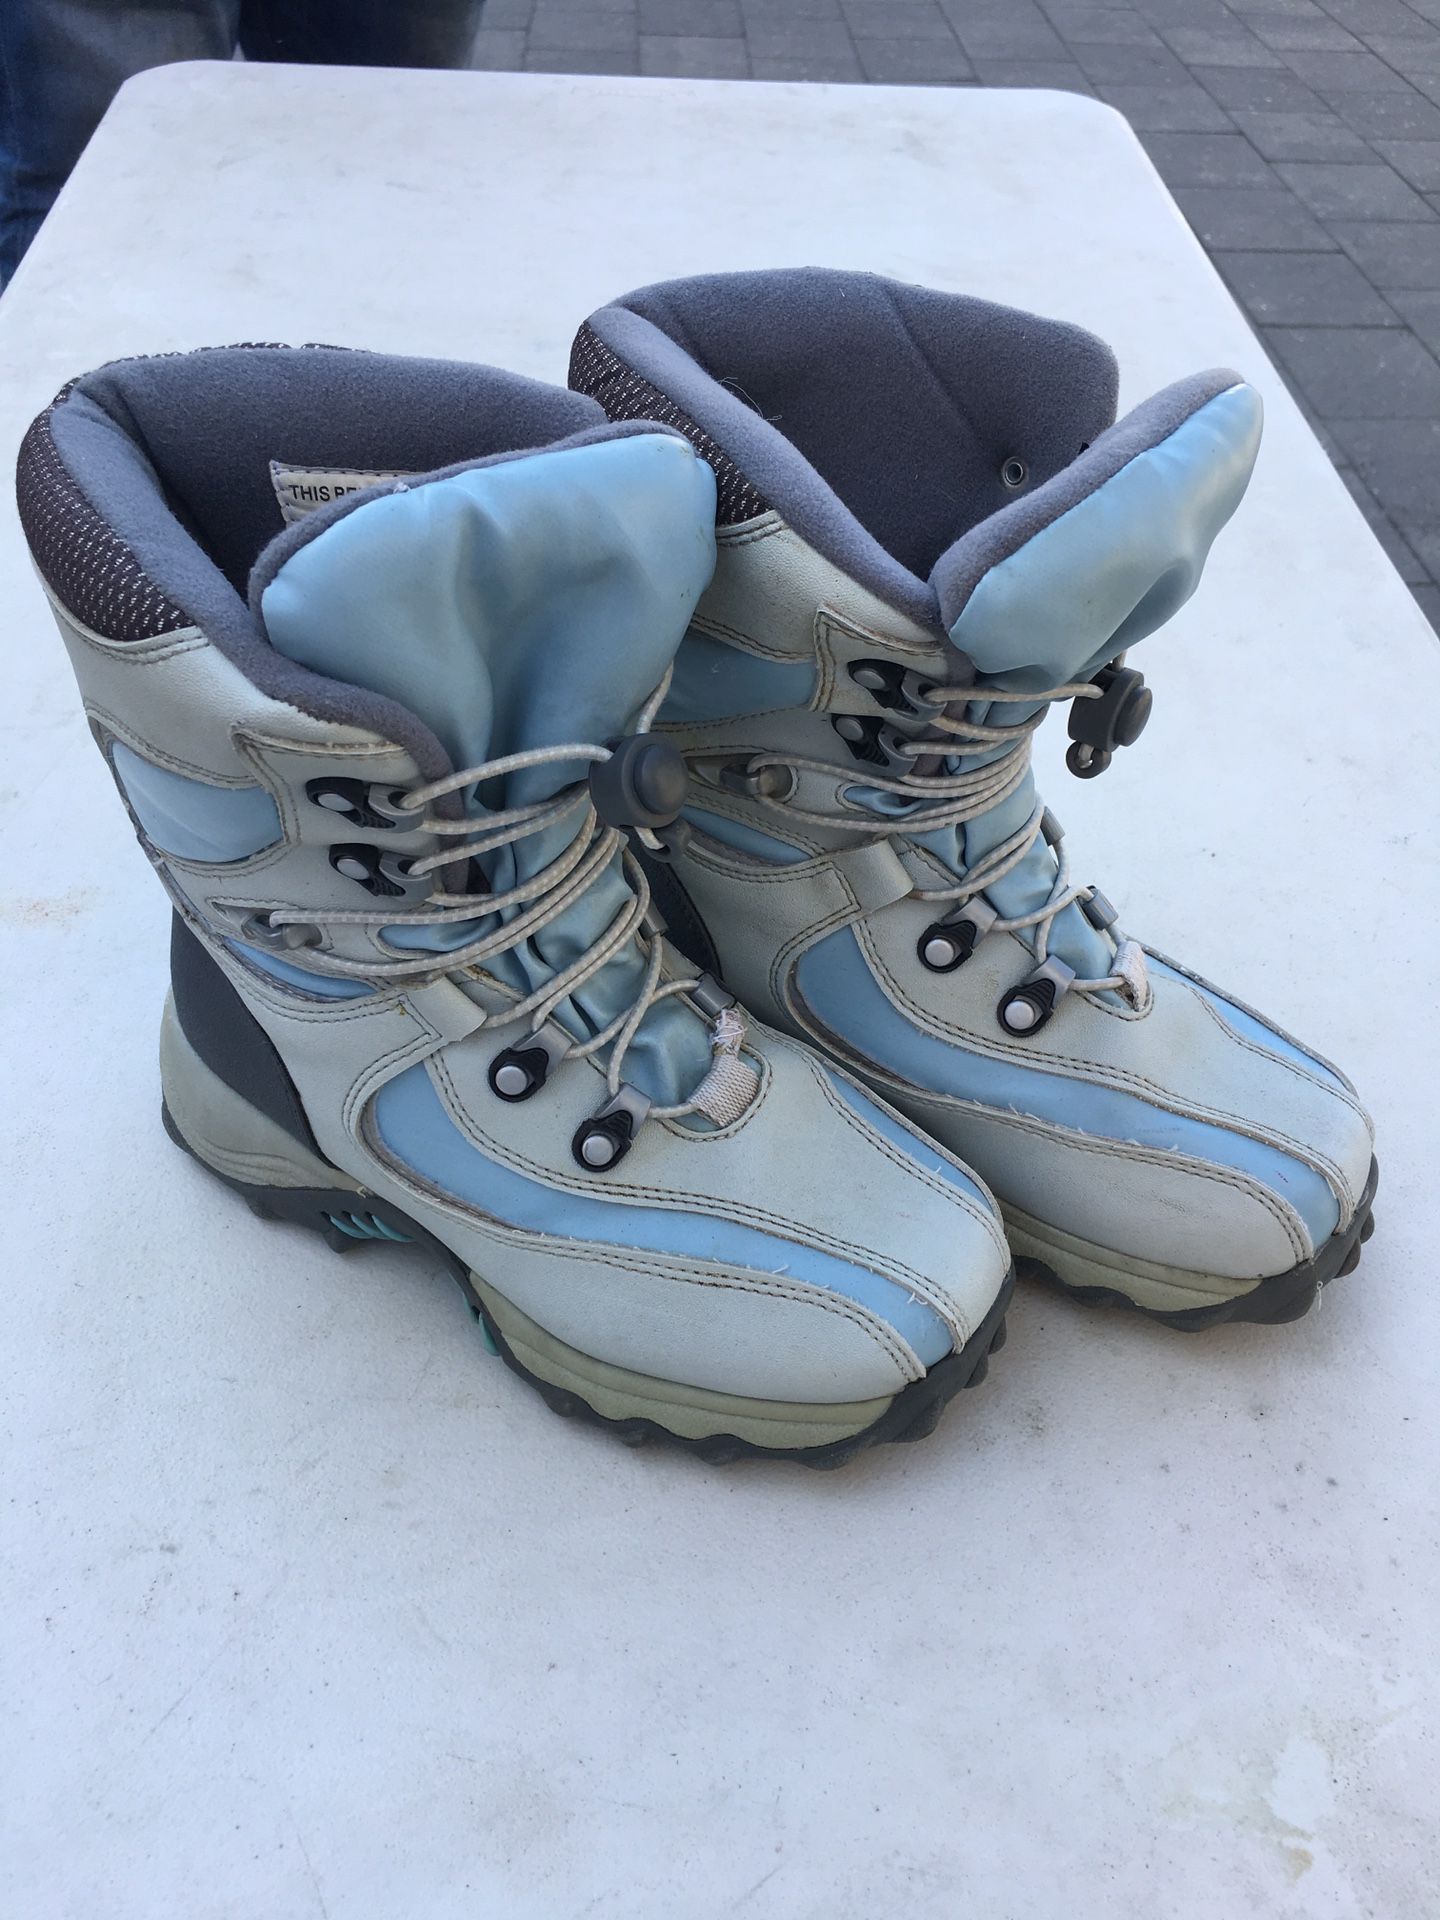 Snow Boots Kids Size 2